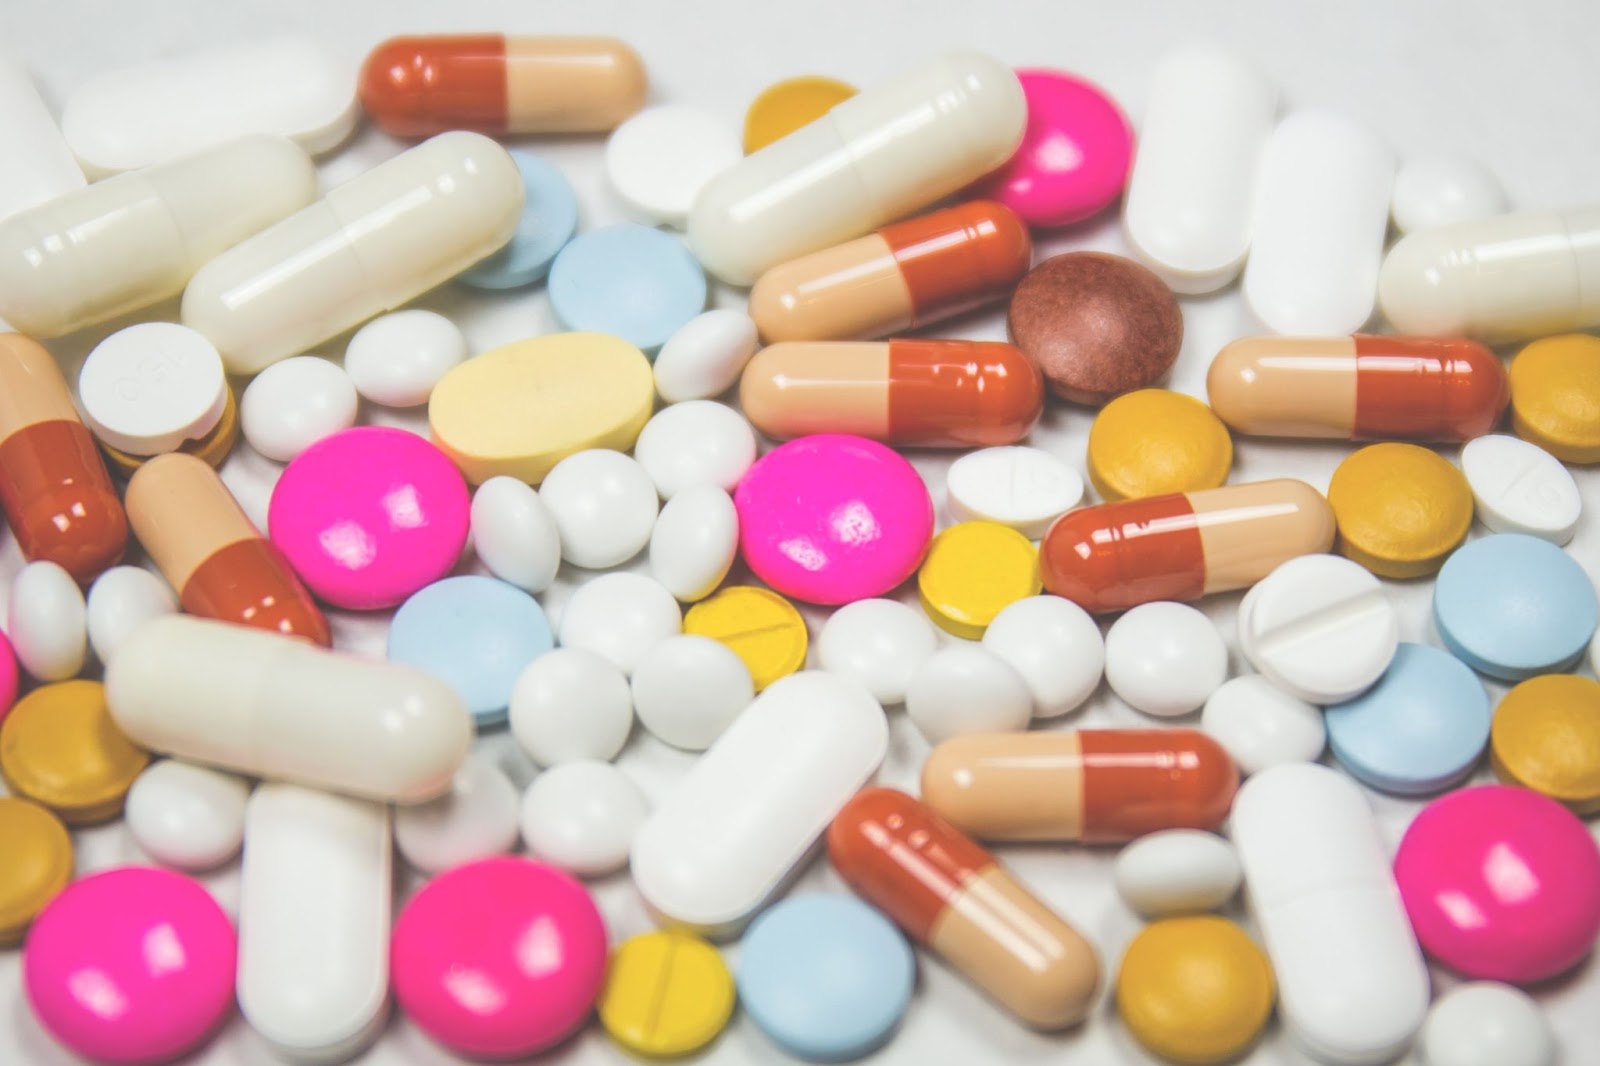 prescription opioids
a lot of different pills